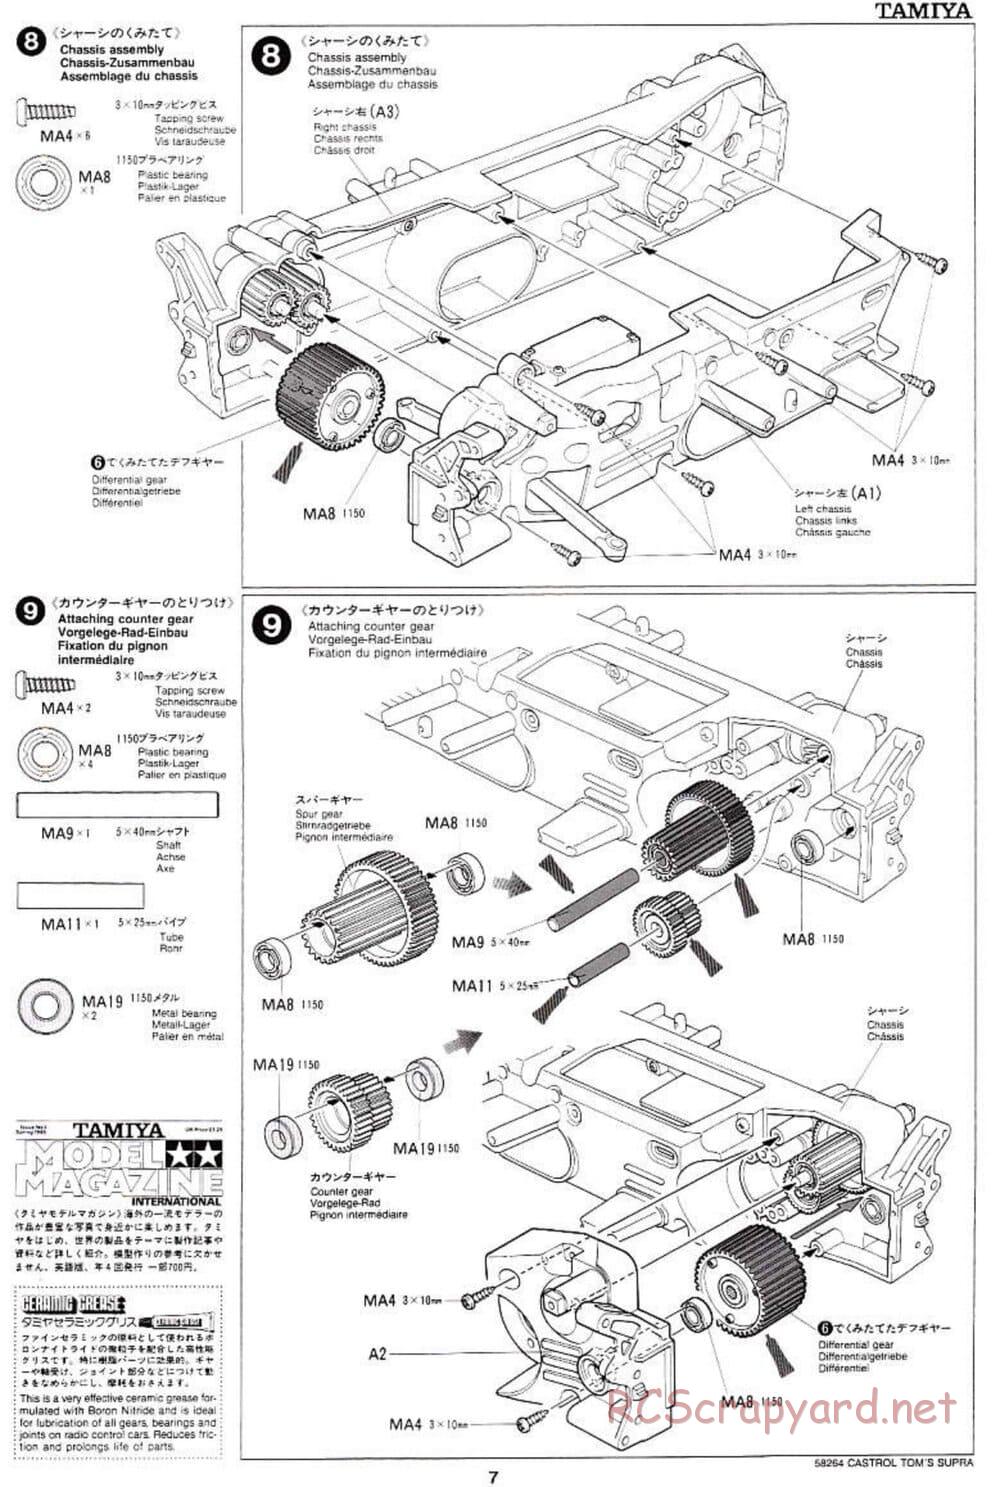 Tamiya - Castrol Tom's Supra 2000 - TL-01 Chassis - Manual - Page 7